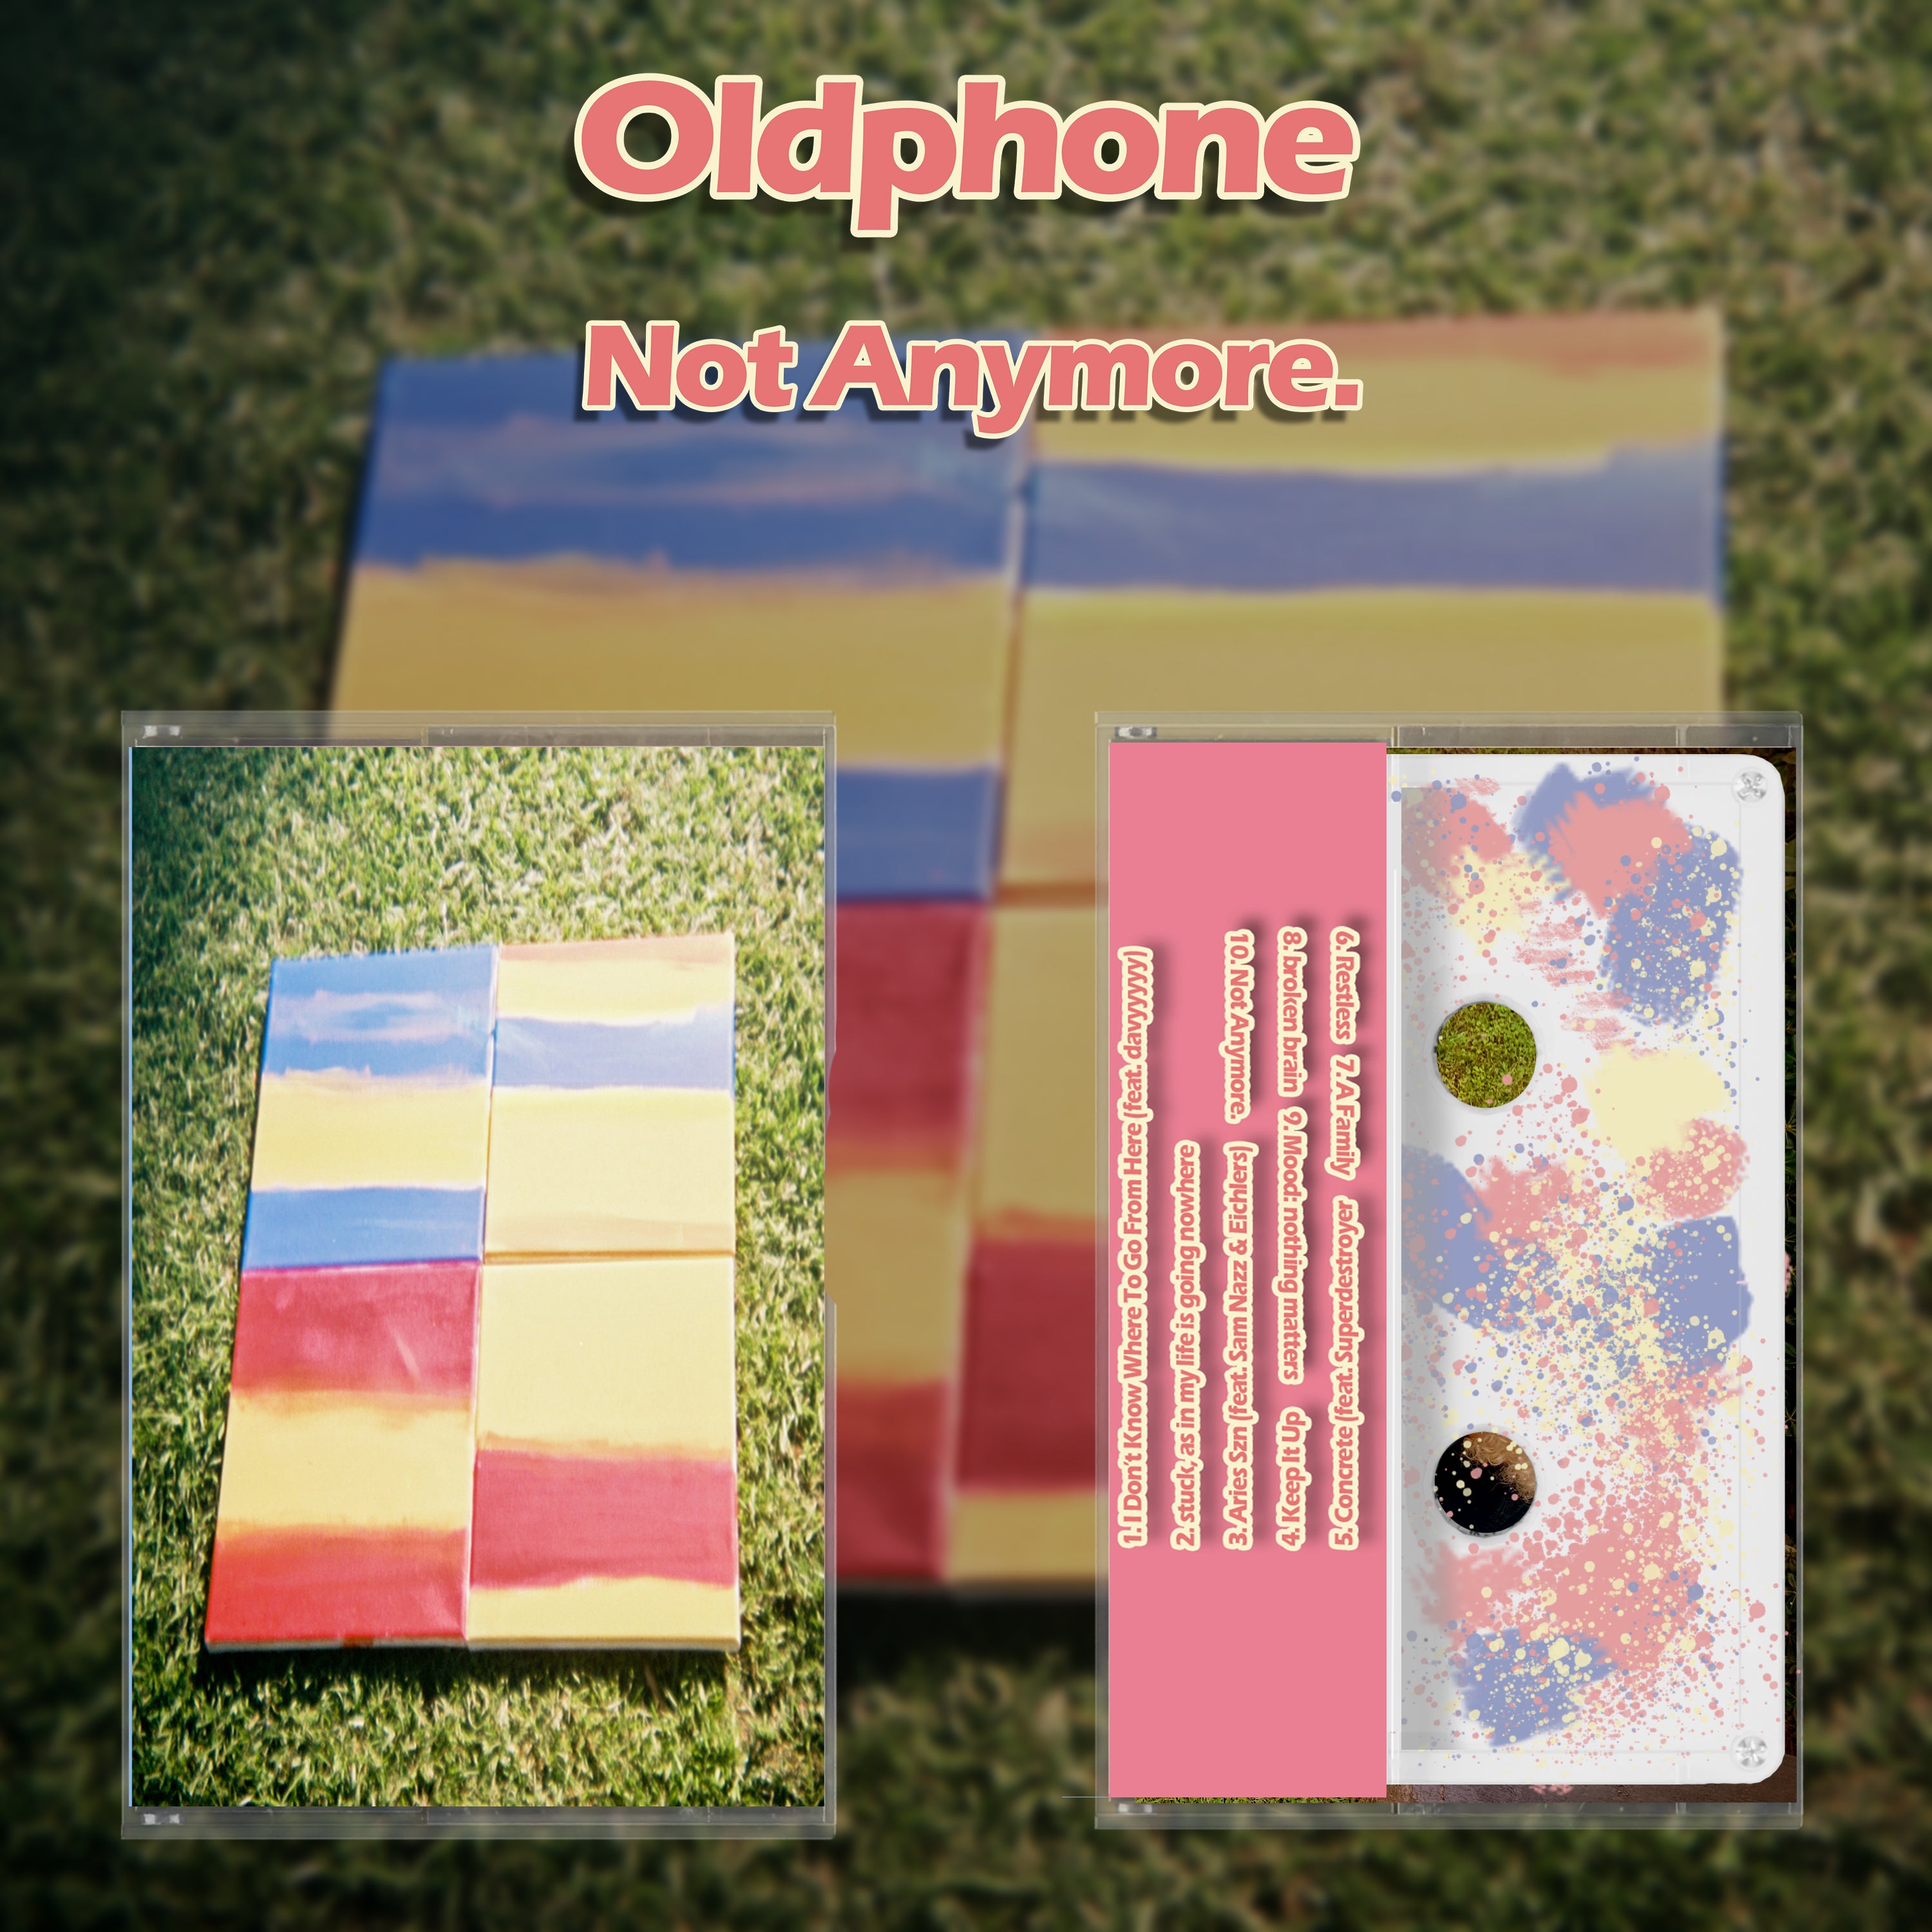 Oldphone - 